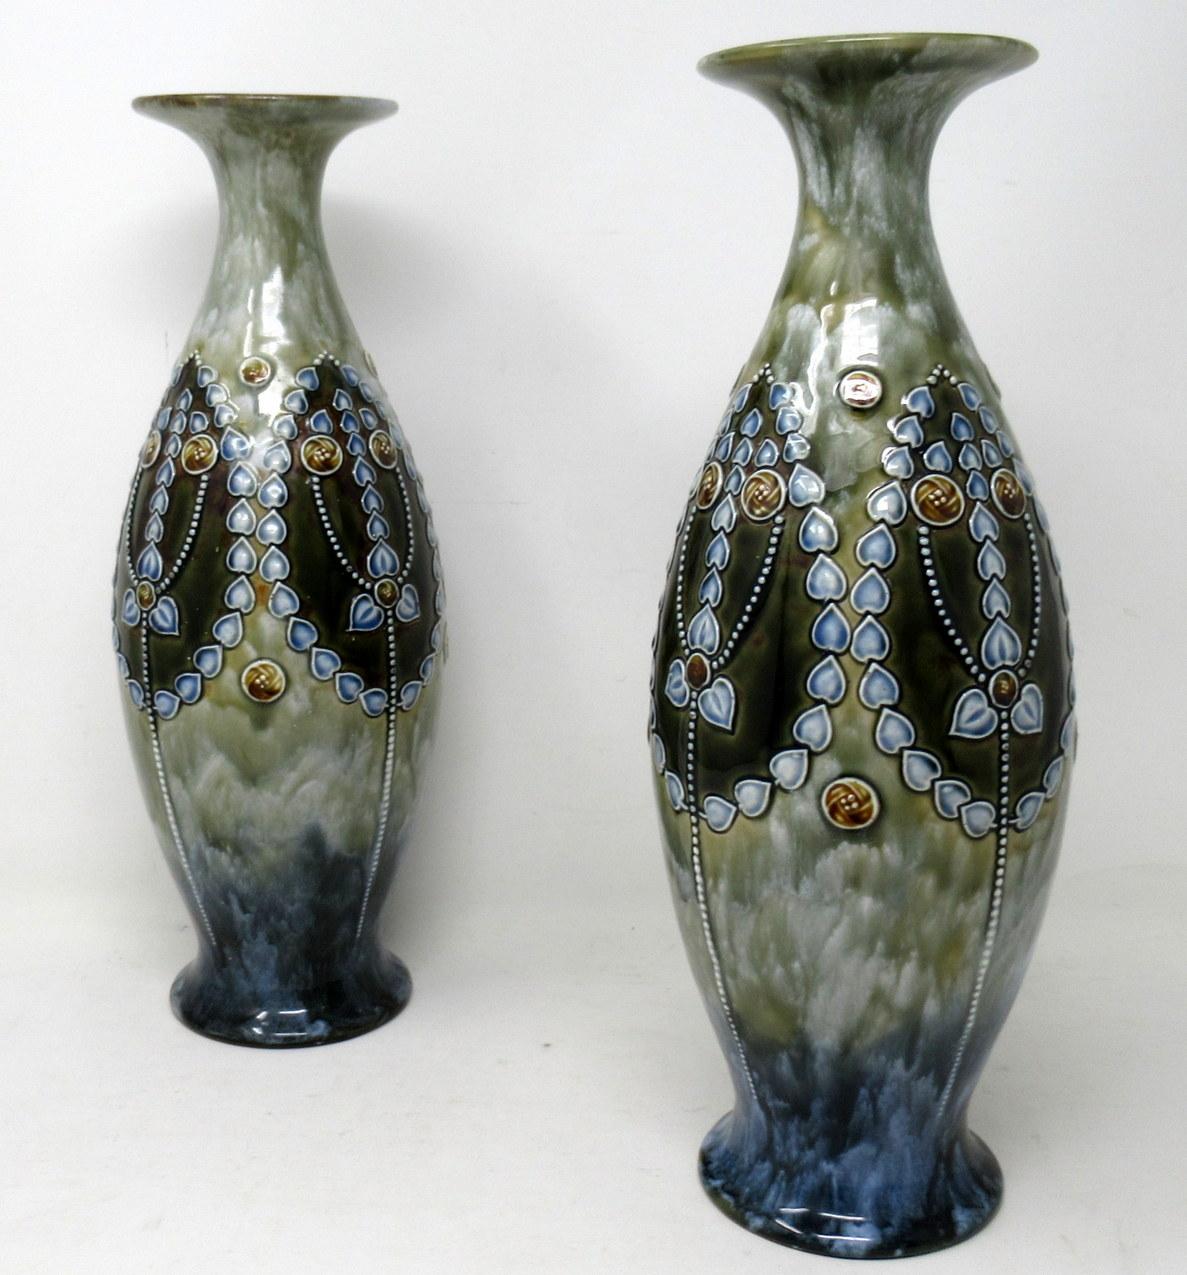 Antique Pair English Porcelain Royal Doulton Ceramic Art Nouveau Vases Urns In Good Condition For Sale In Dublin, Ireland